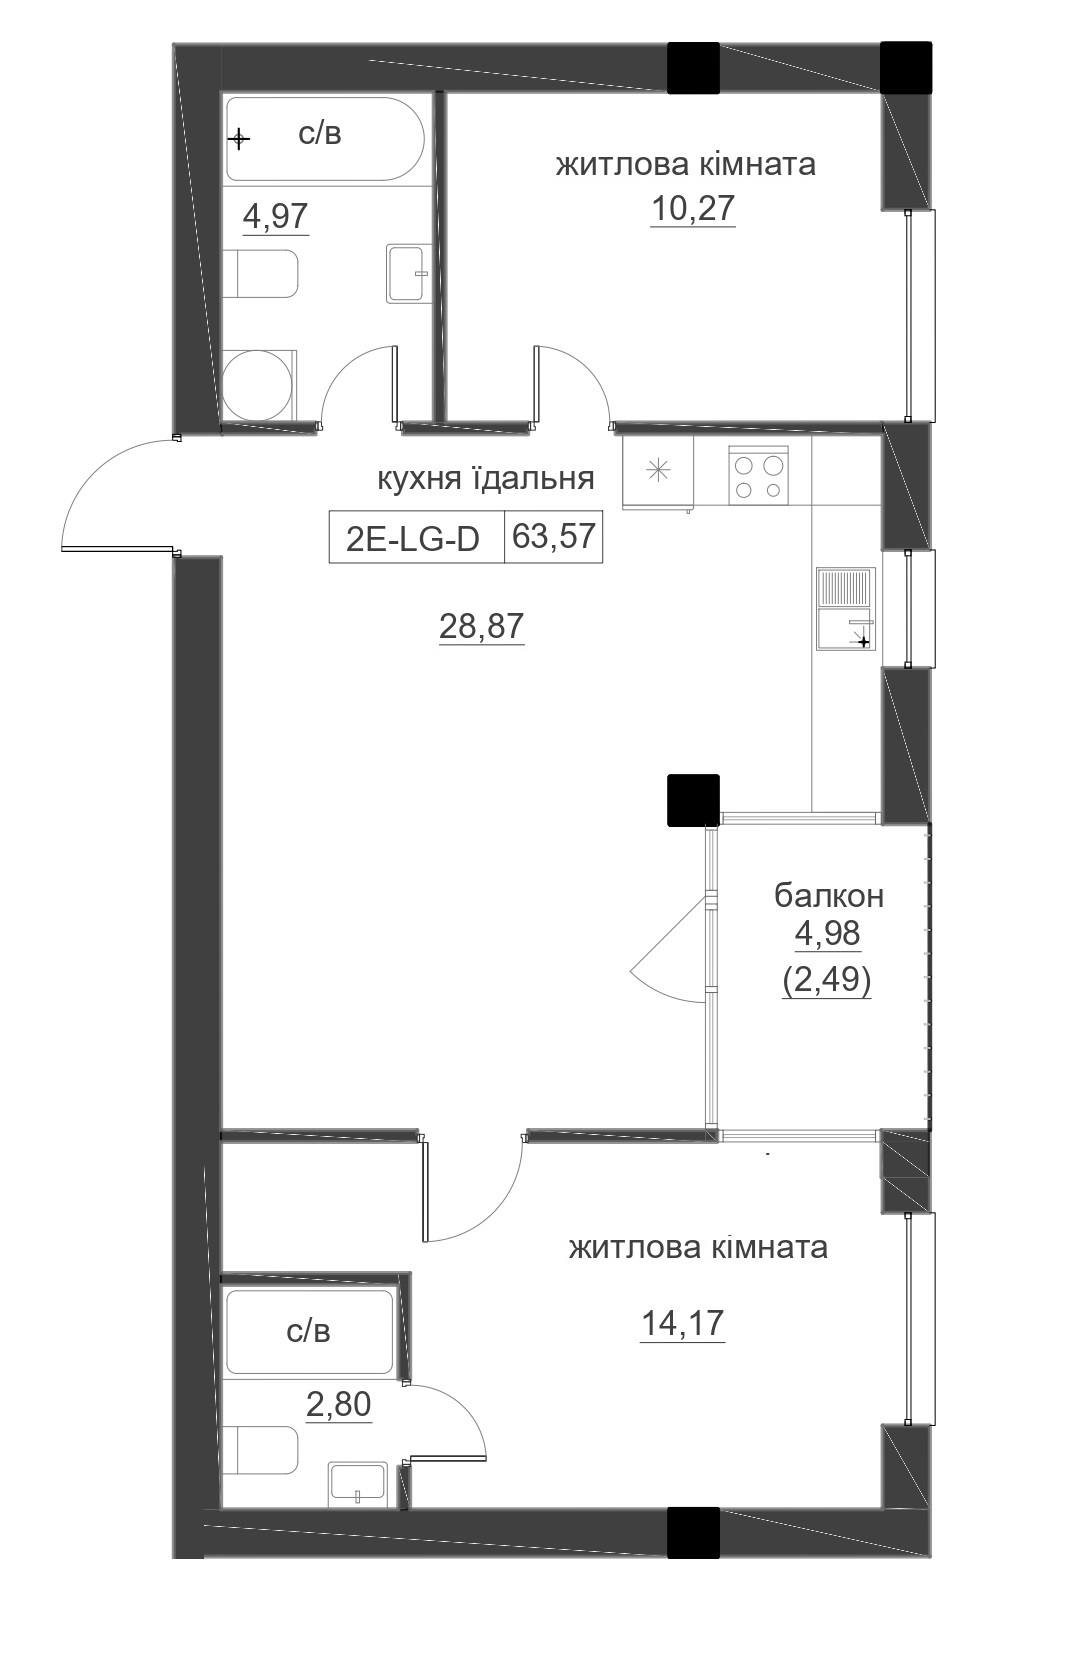 Planning 2-rm flats area 63.57m2, LR-005-09/0006.